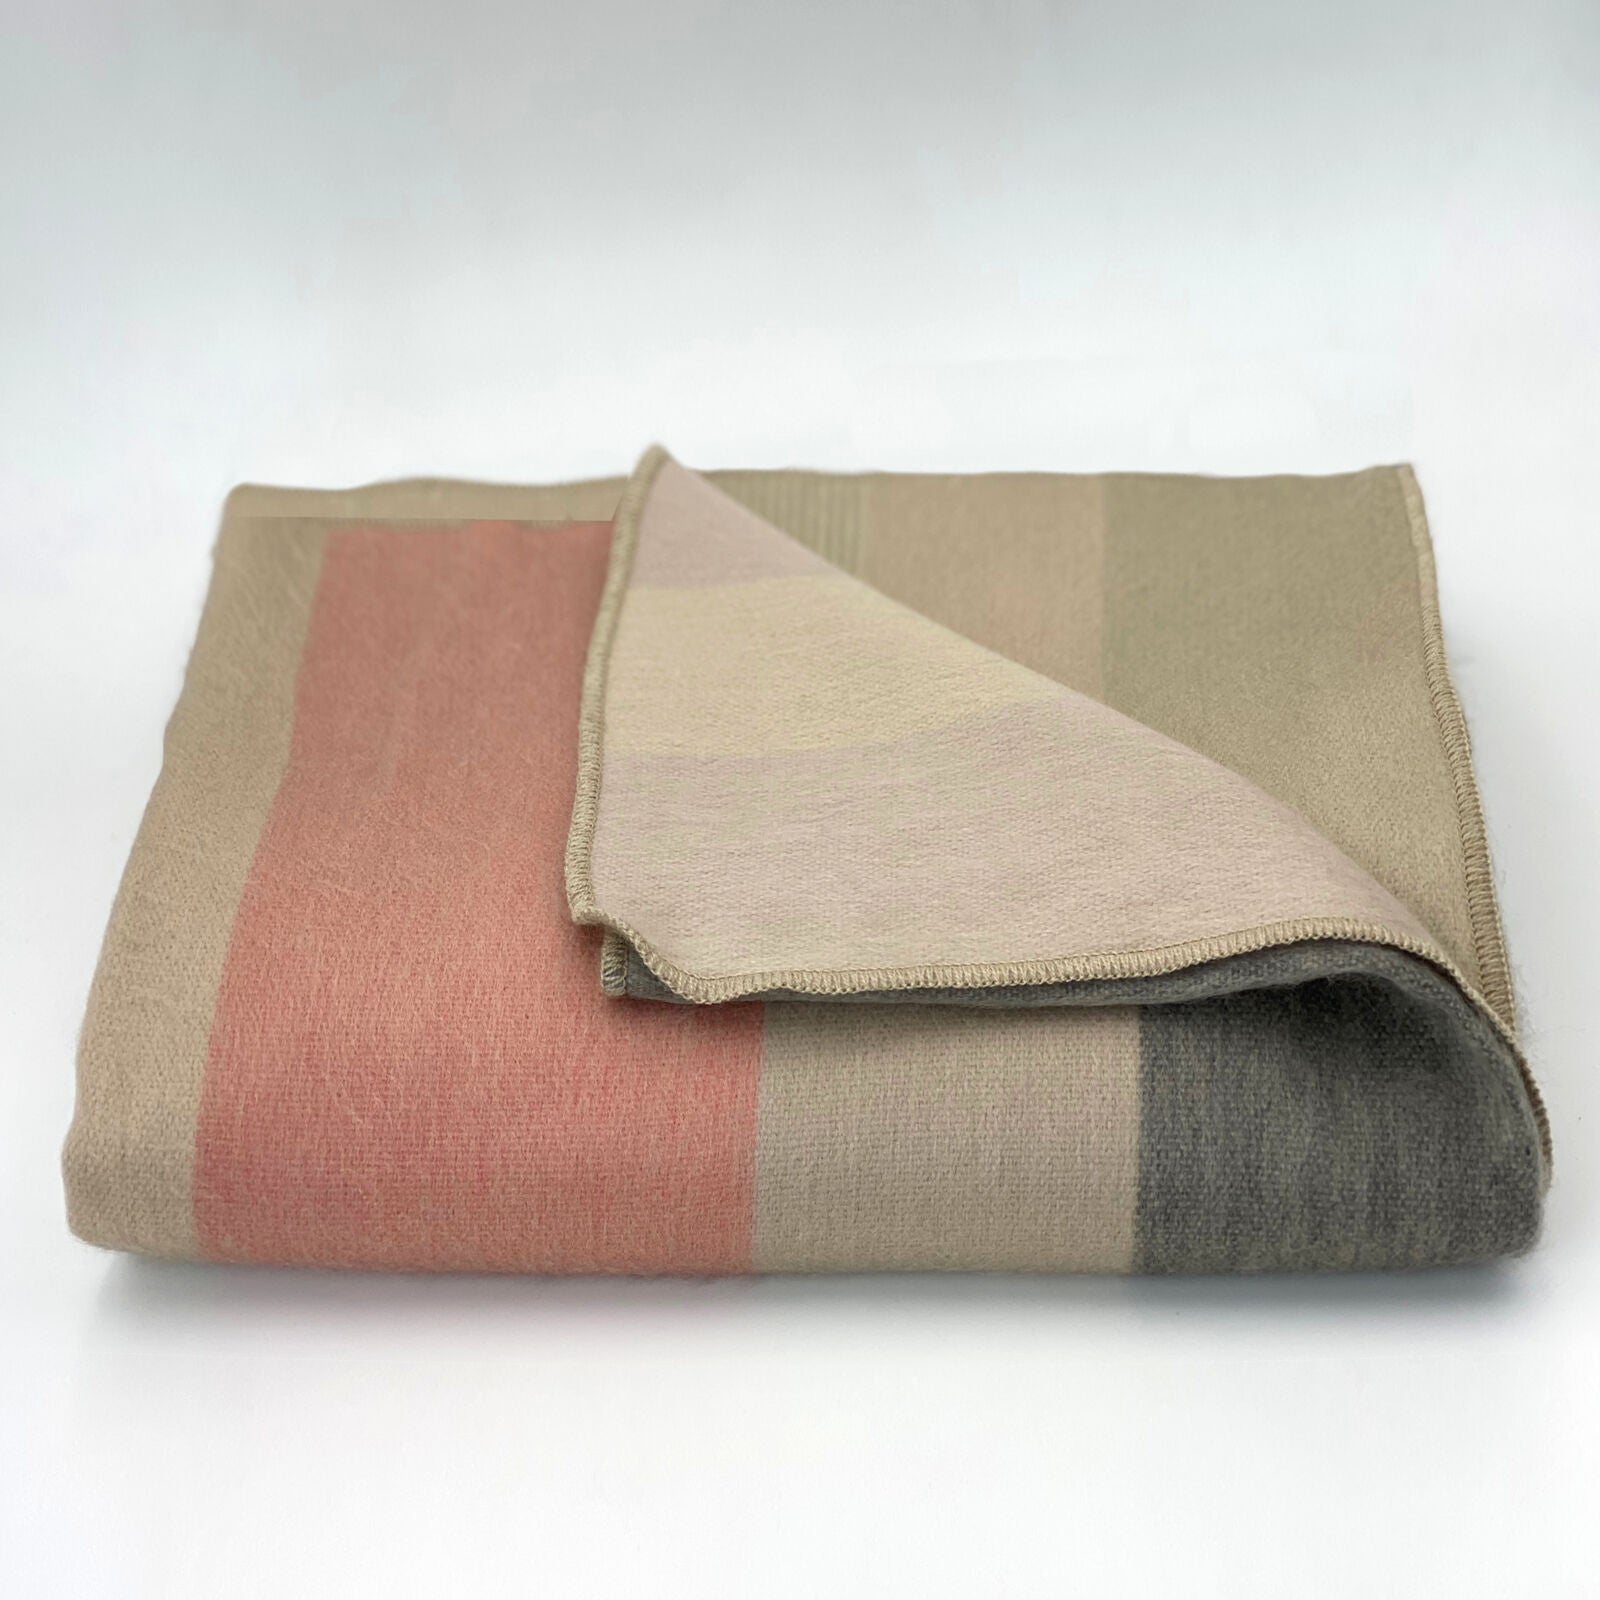 Tilivi - Baby Alpaca Wool Throw Blanket / Sofa Cover - Queen 100" x 67" - striped pattern ecru coral